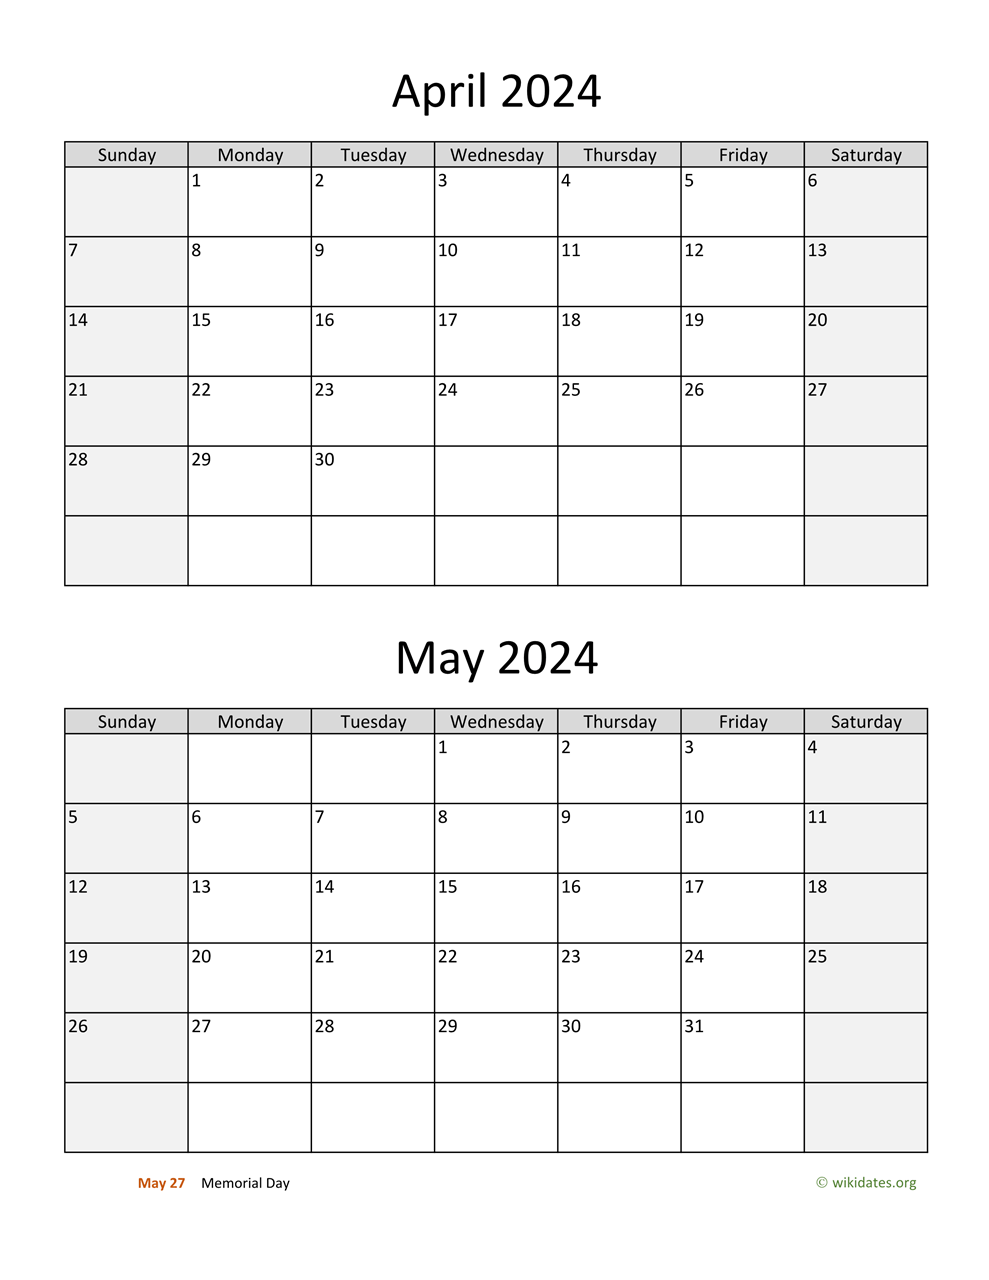 April And May 2024 Calendar | Wikidates for Printable Calendar 2024 April May June